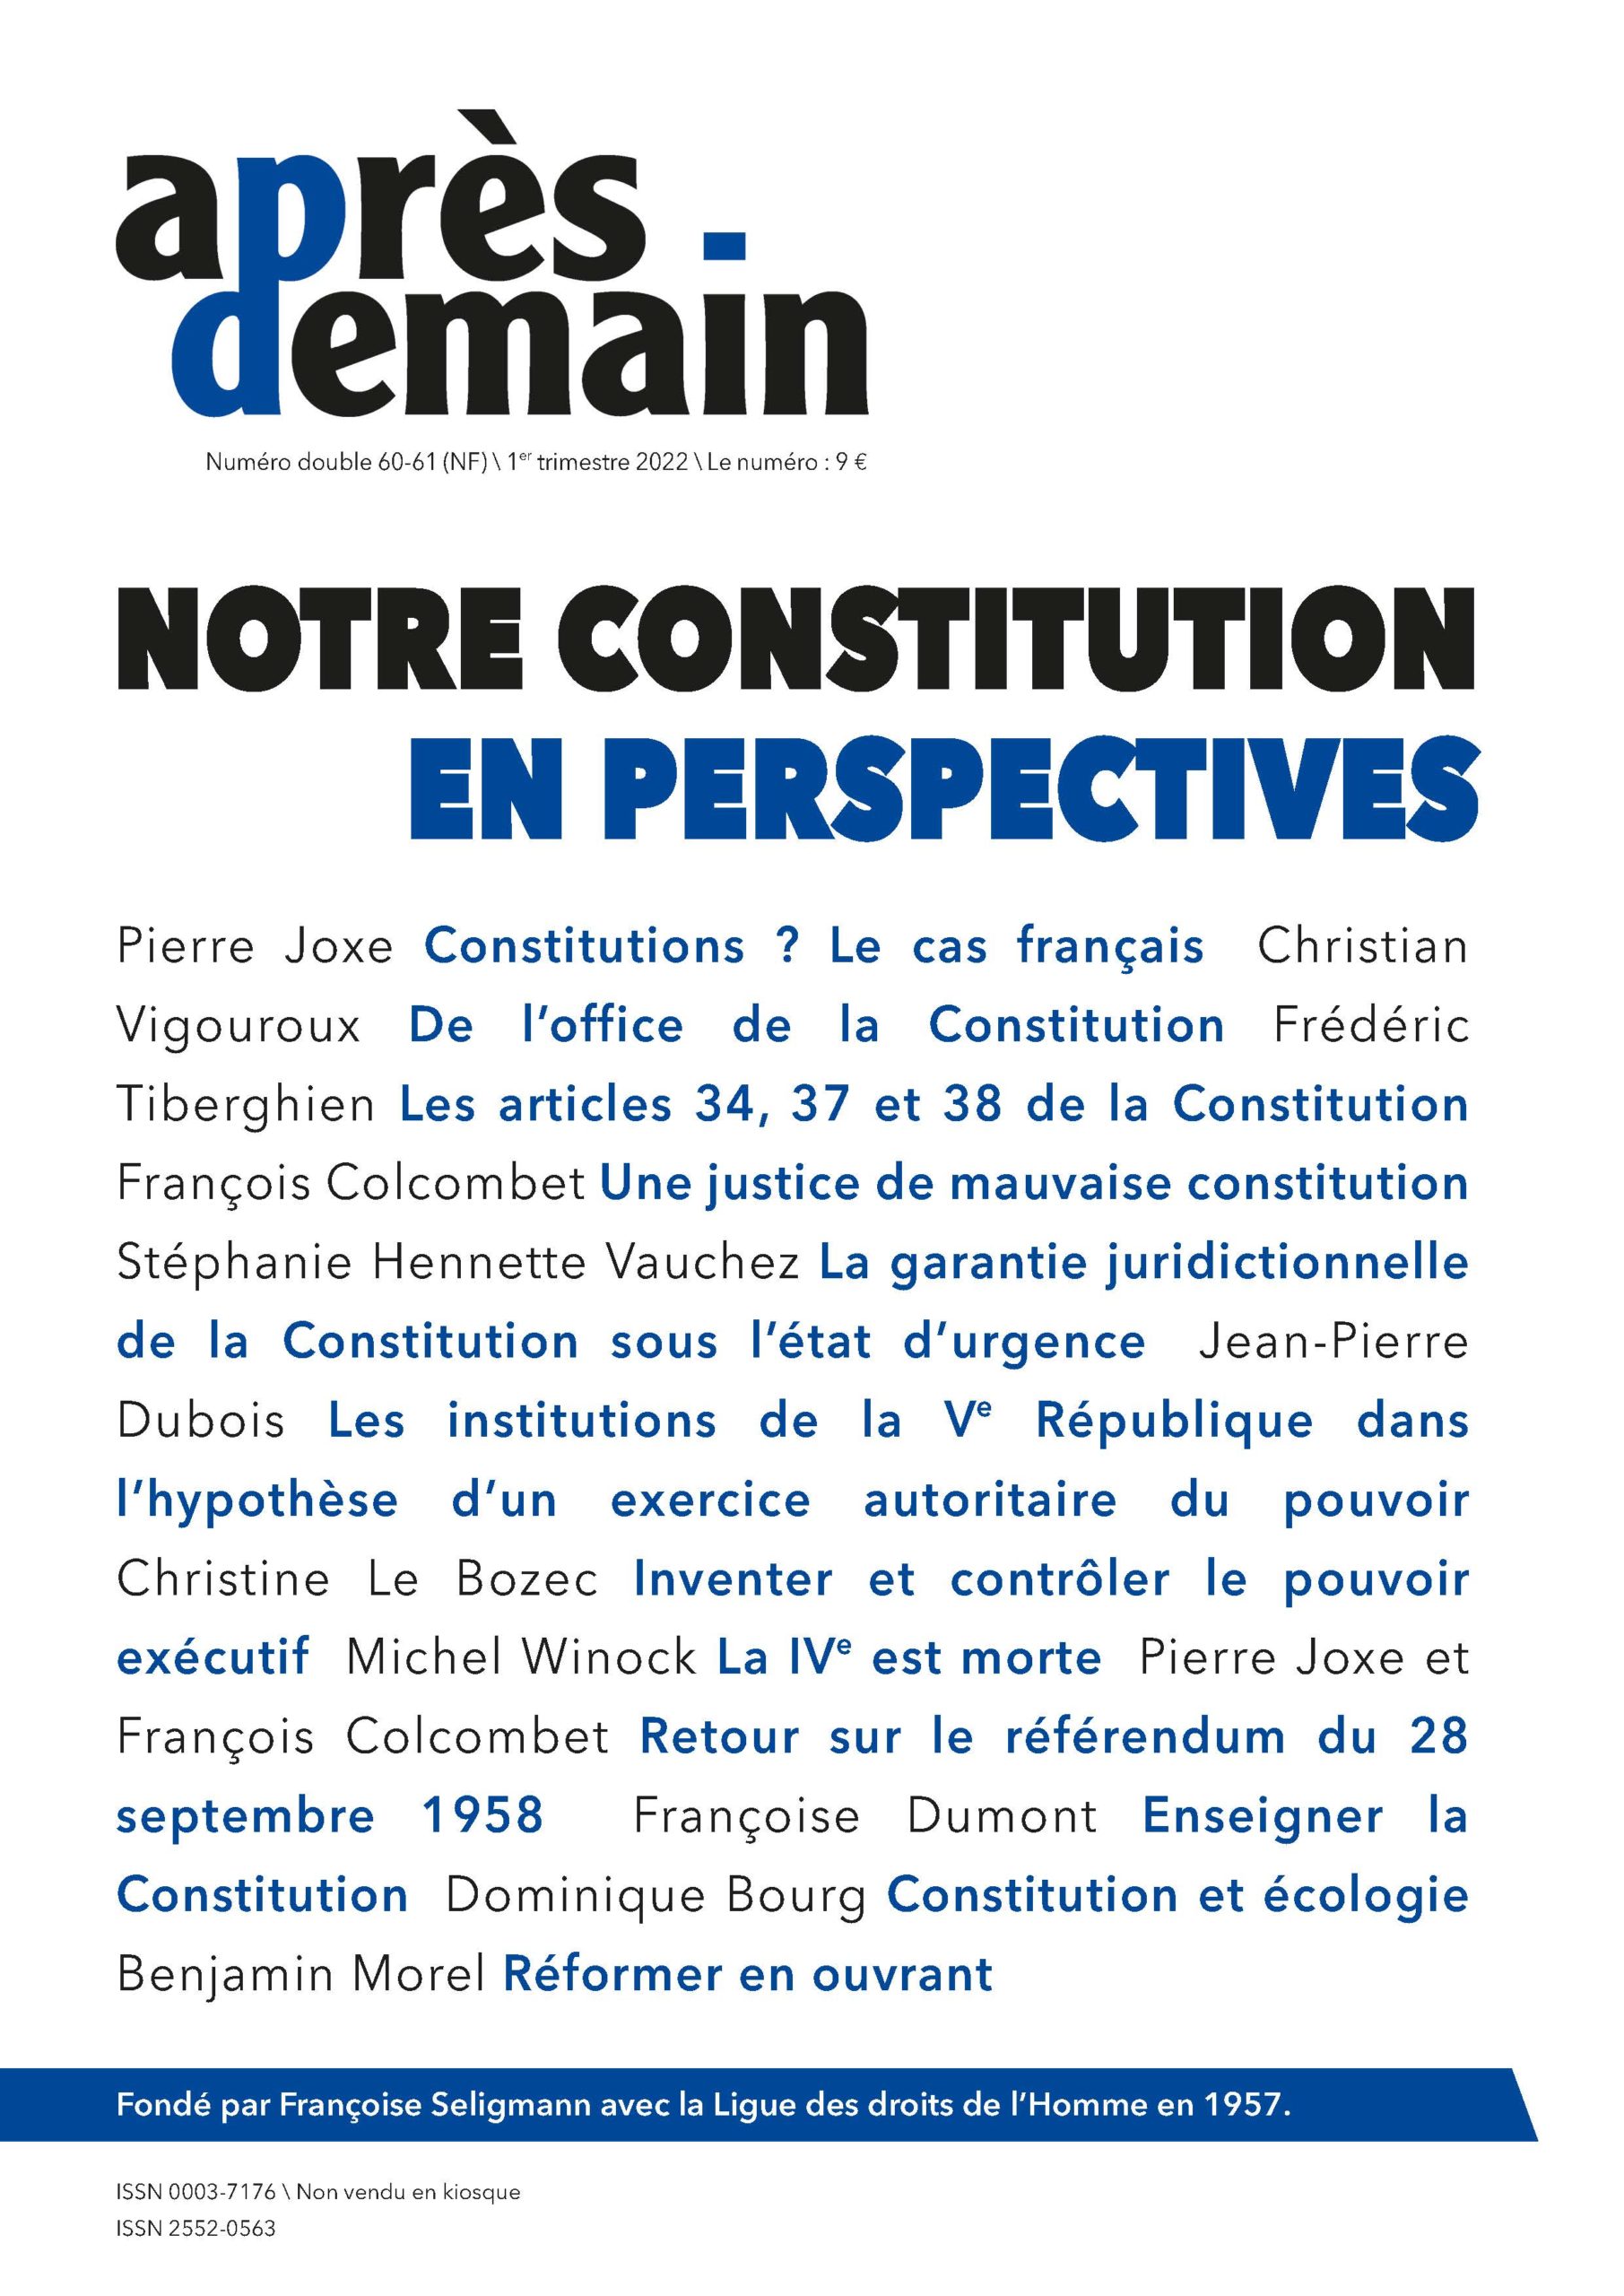 NF-060 061 – Notre Constitution en perspectives